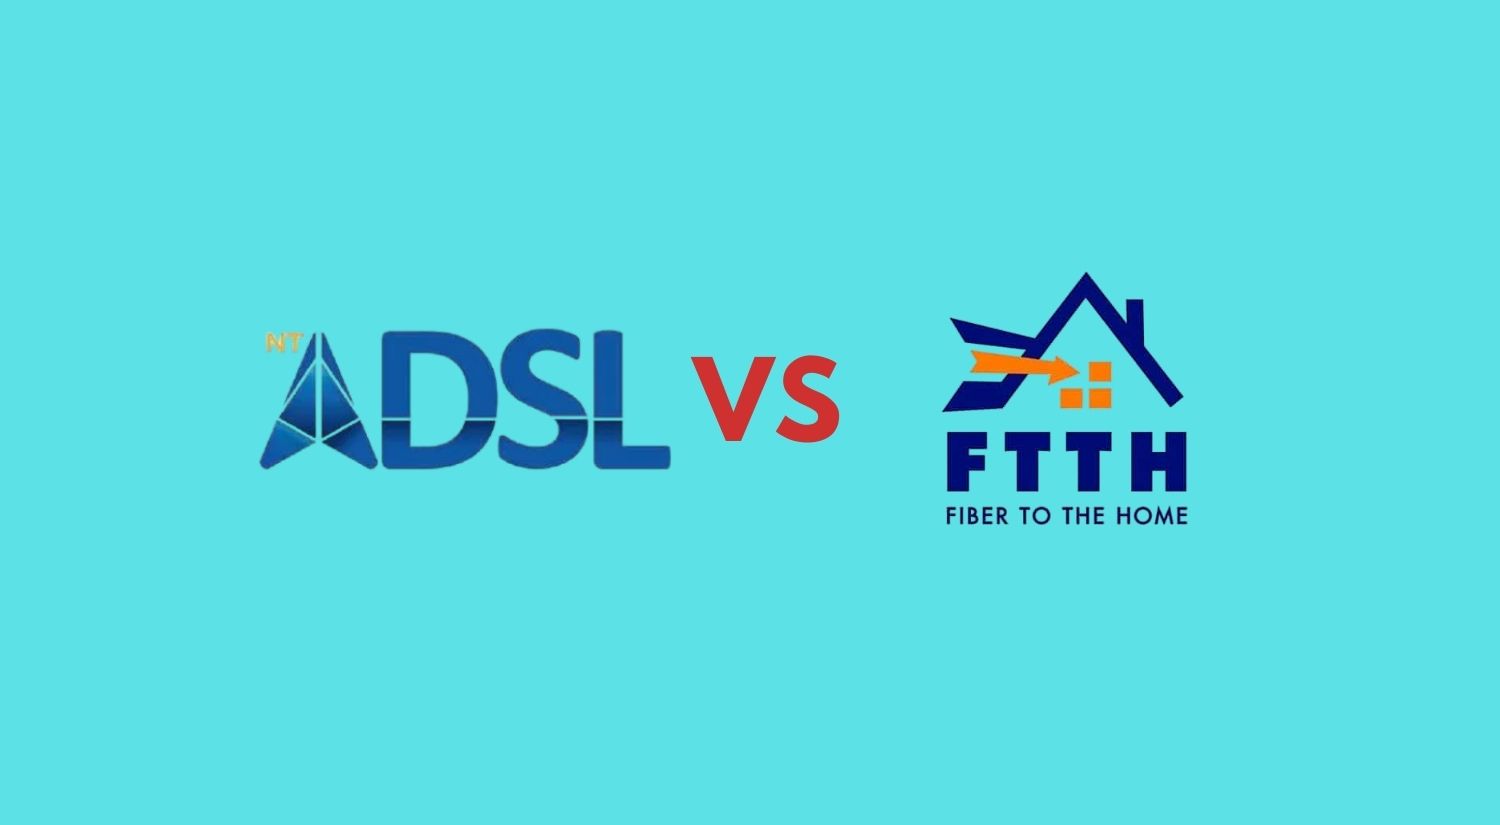 ADSL vs FTTH fiber internet